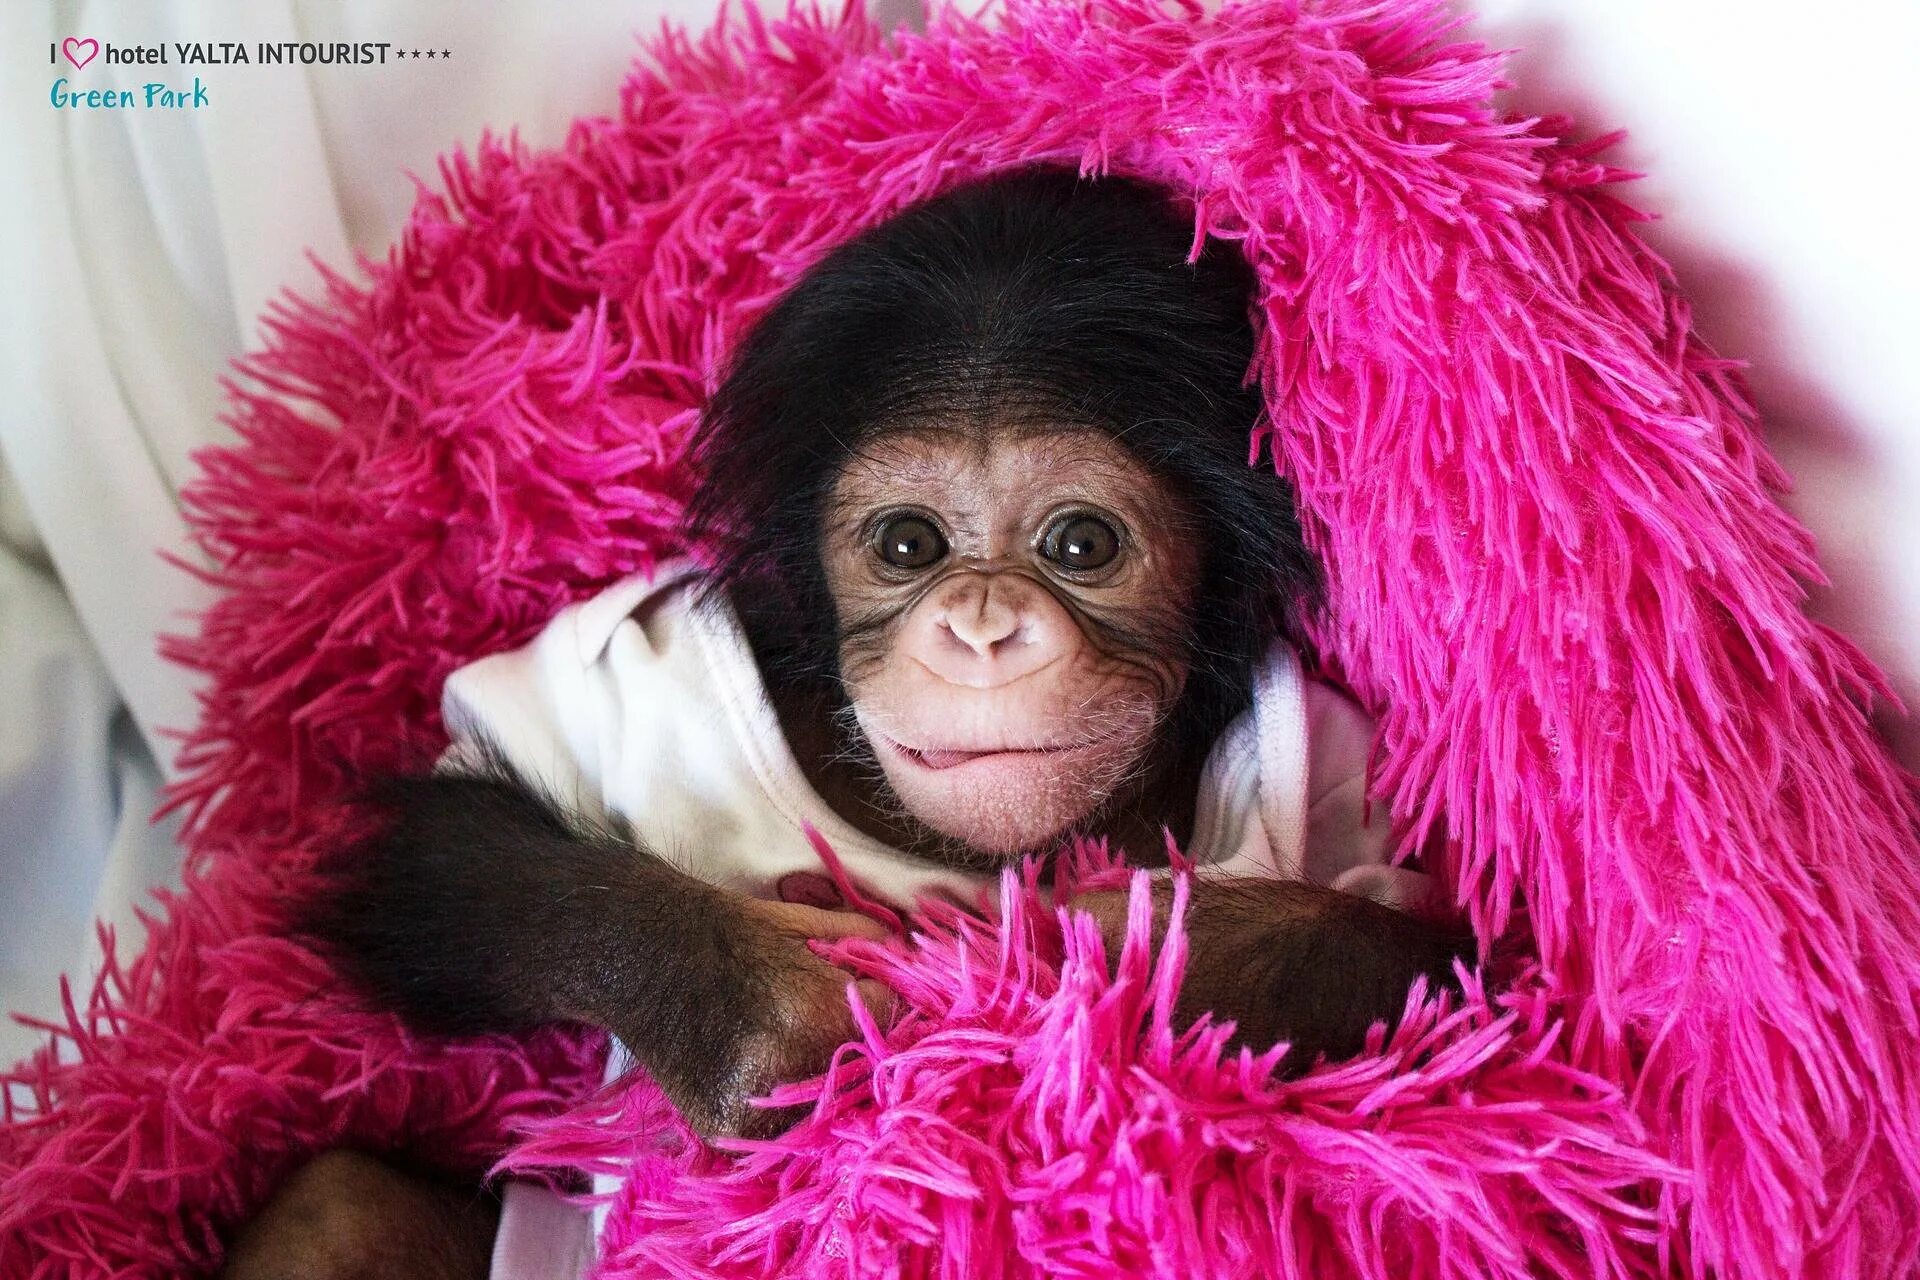 Розовая обезьяна. Обезьянка в одежде. Обезьянка с бантиком. Маленькая обезьянка с бантиком.